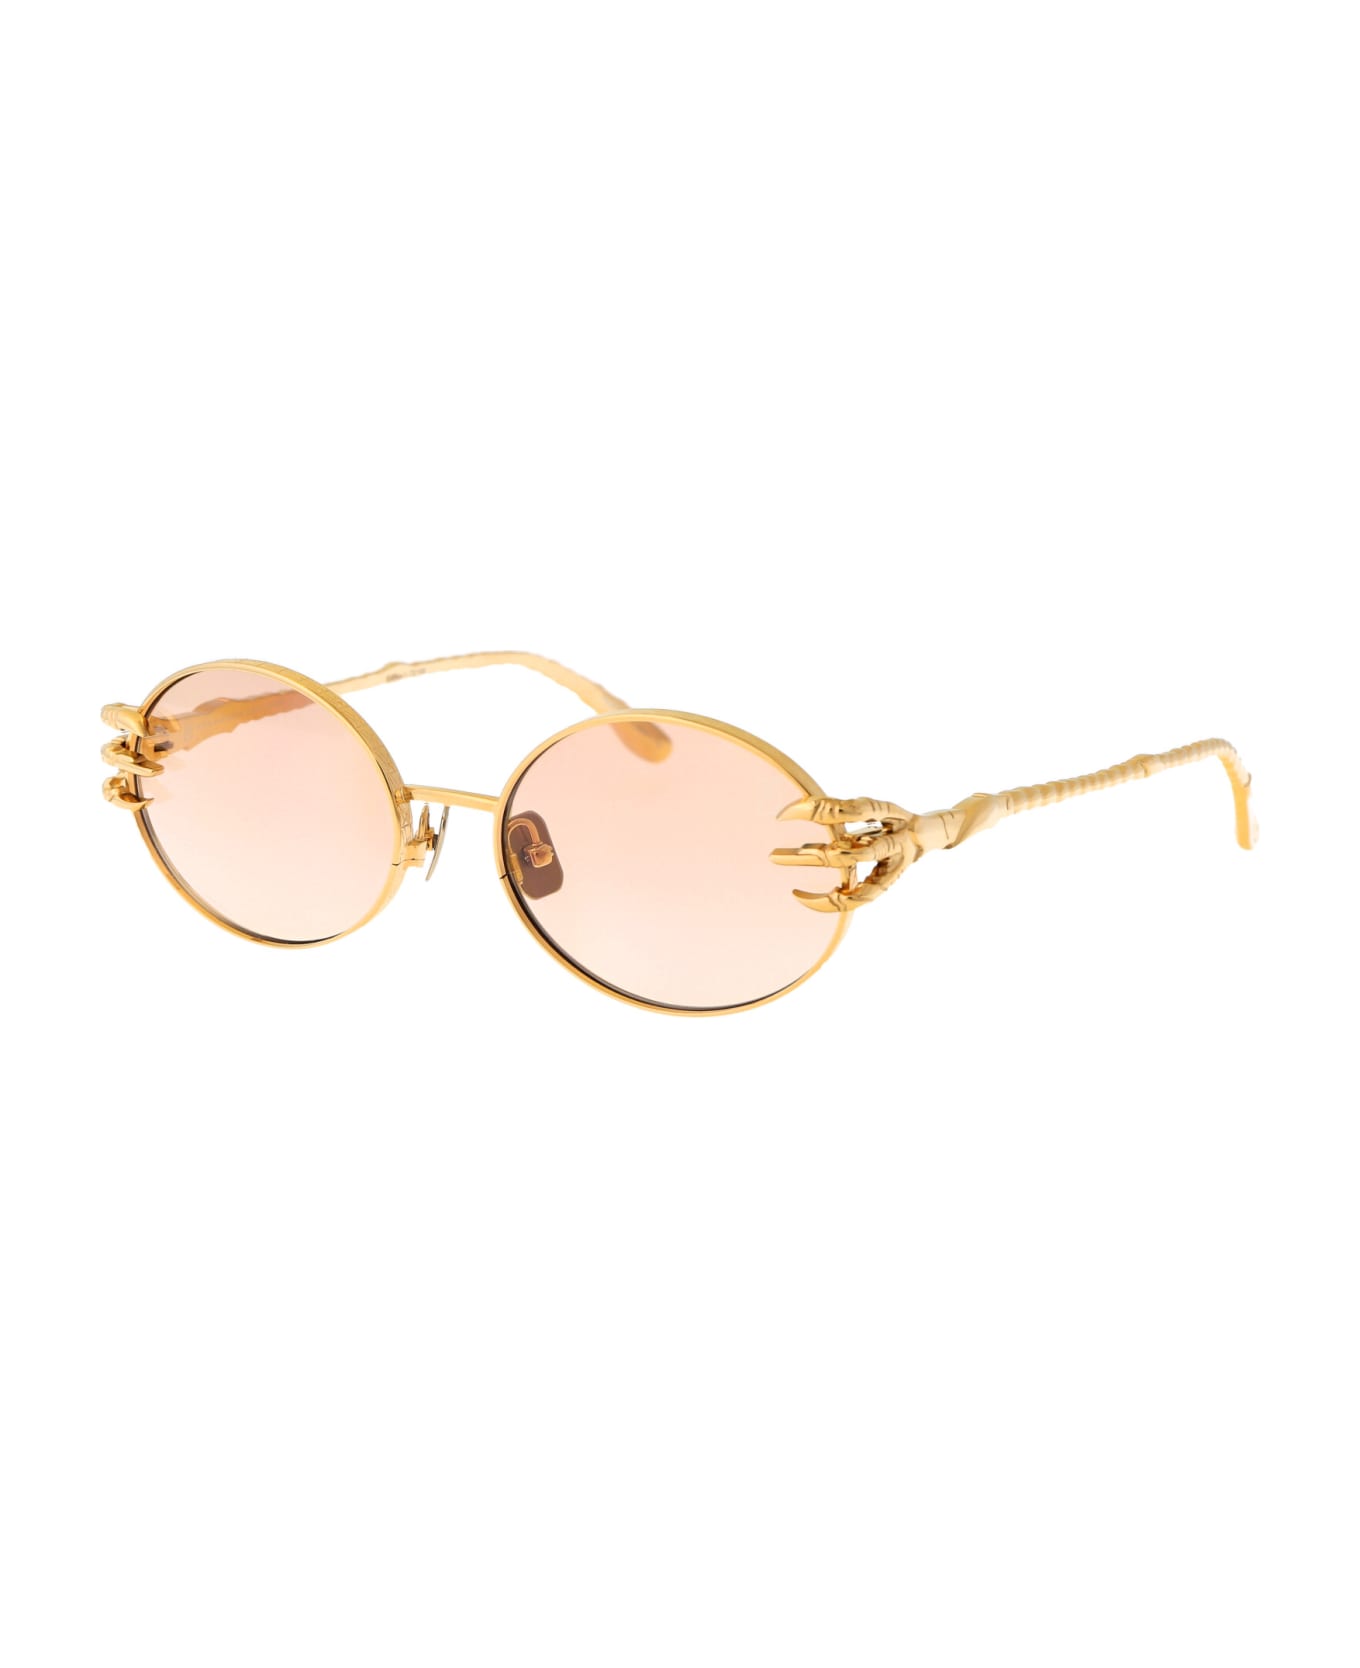 Anna-Karin Karlsson Claw Aventure Sunglasses - GOLD